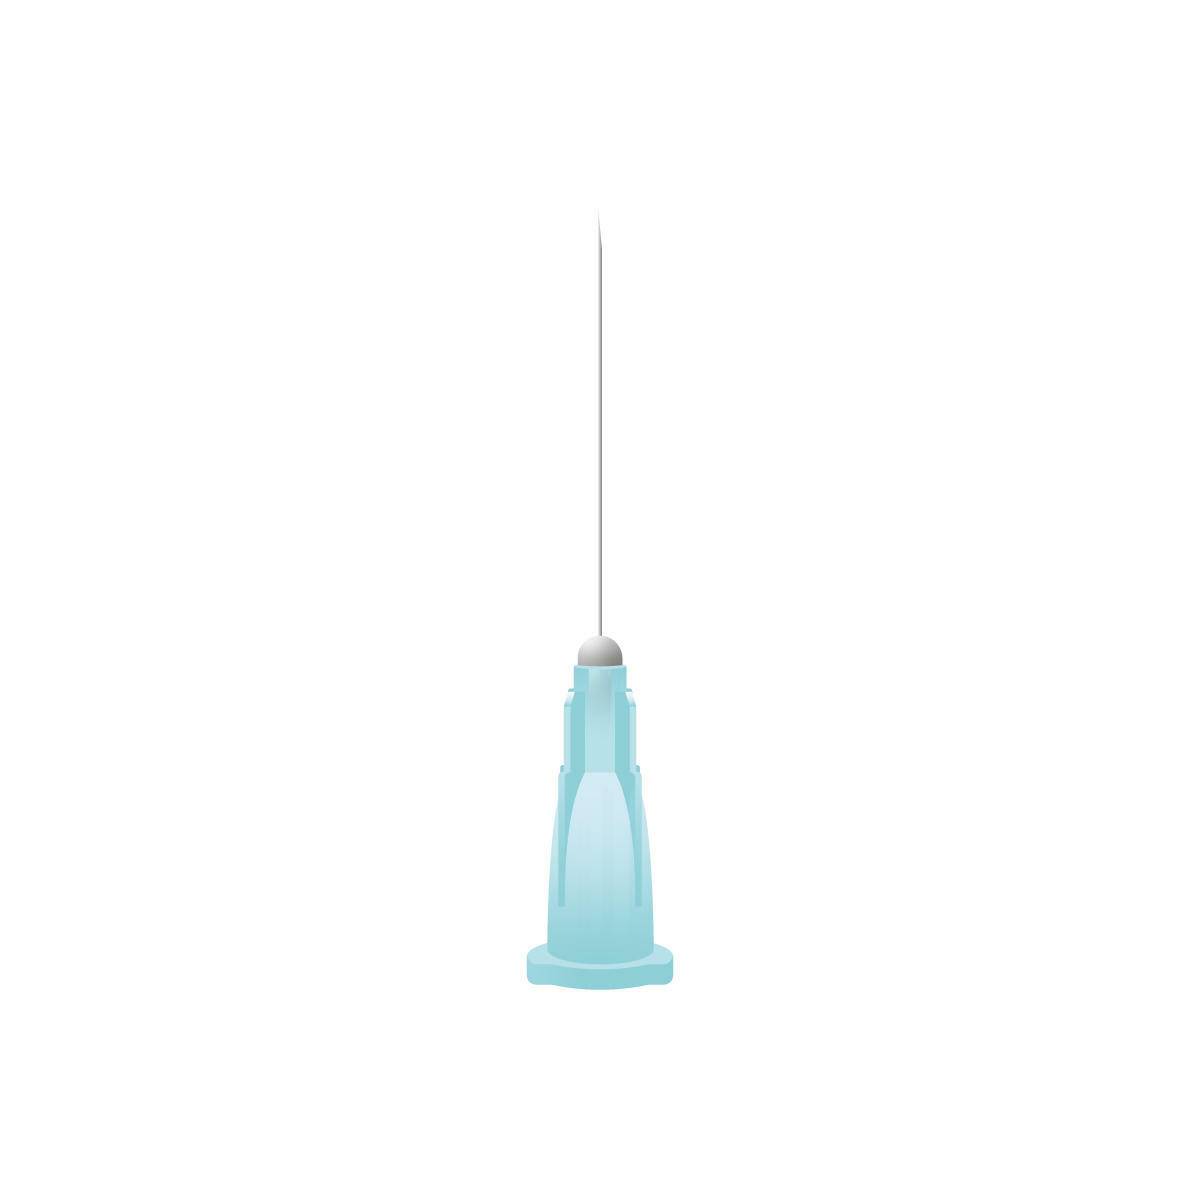 31g Light Blue 25mm Meso-relle Mesotherapy Needle - UKMEDI